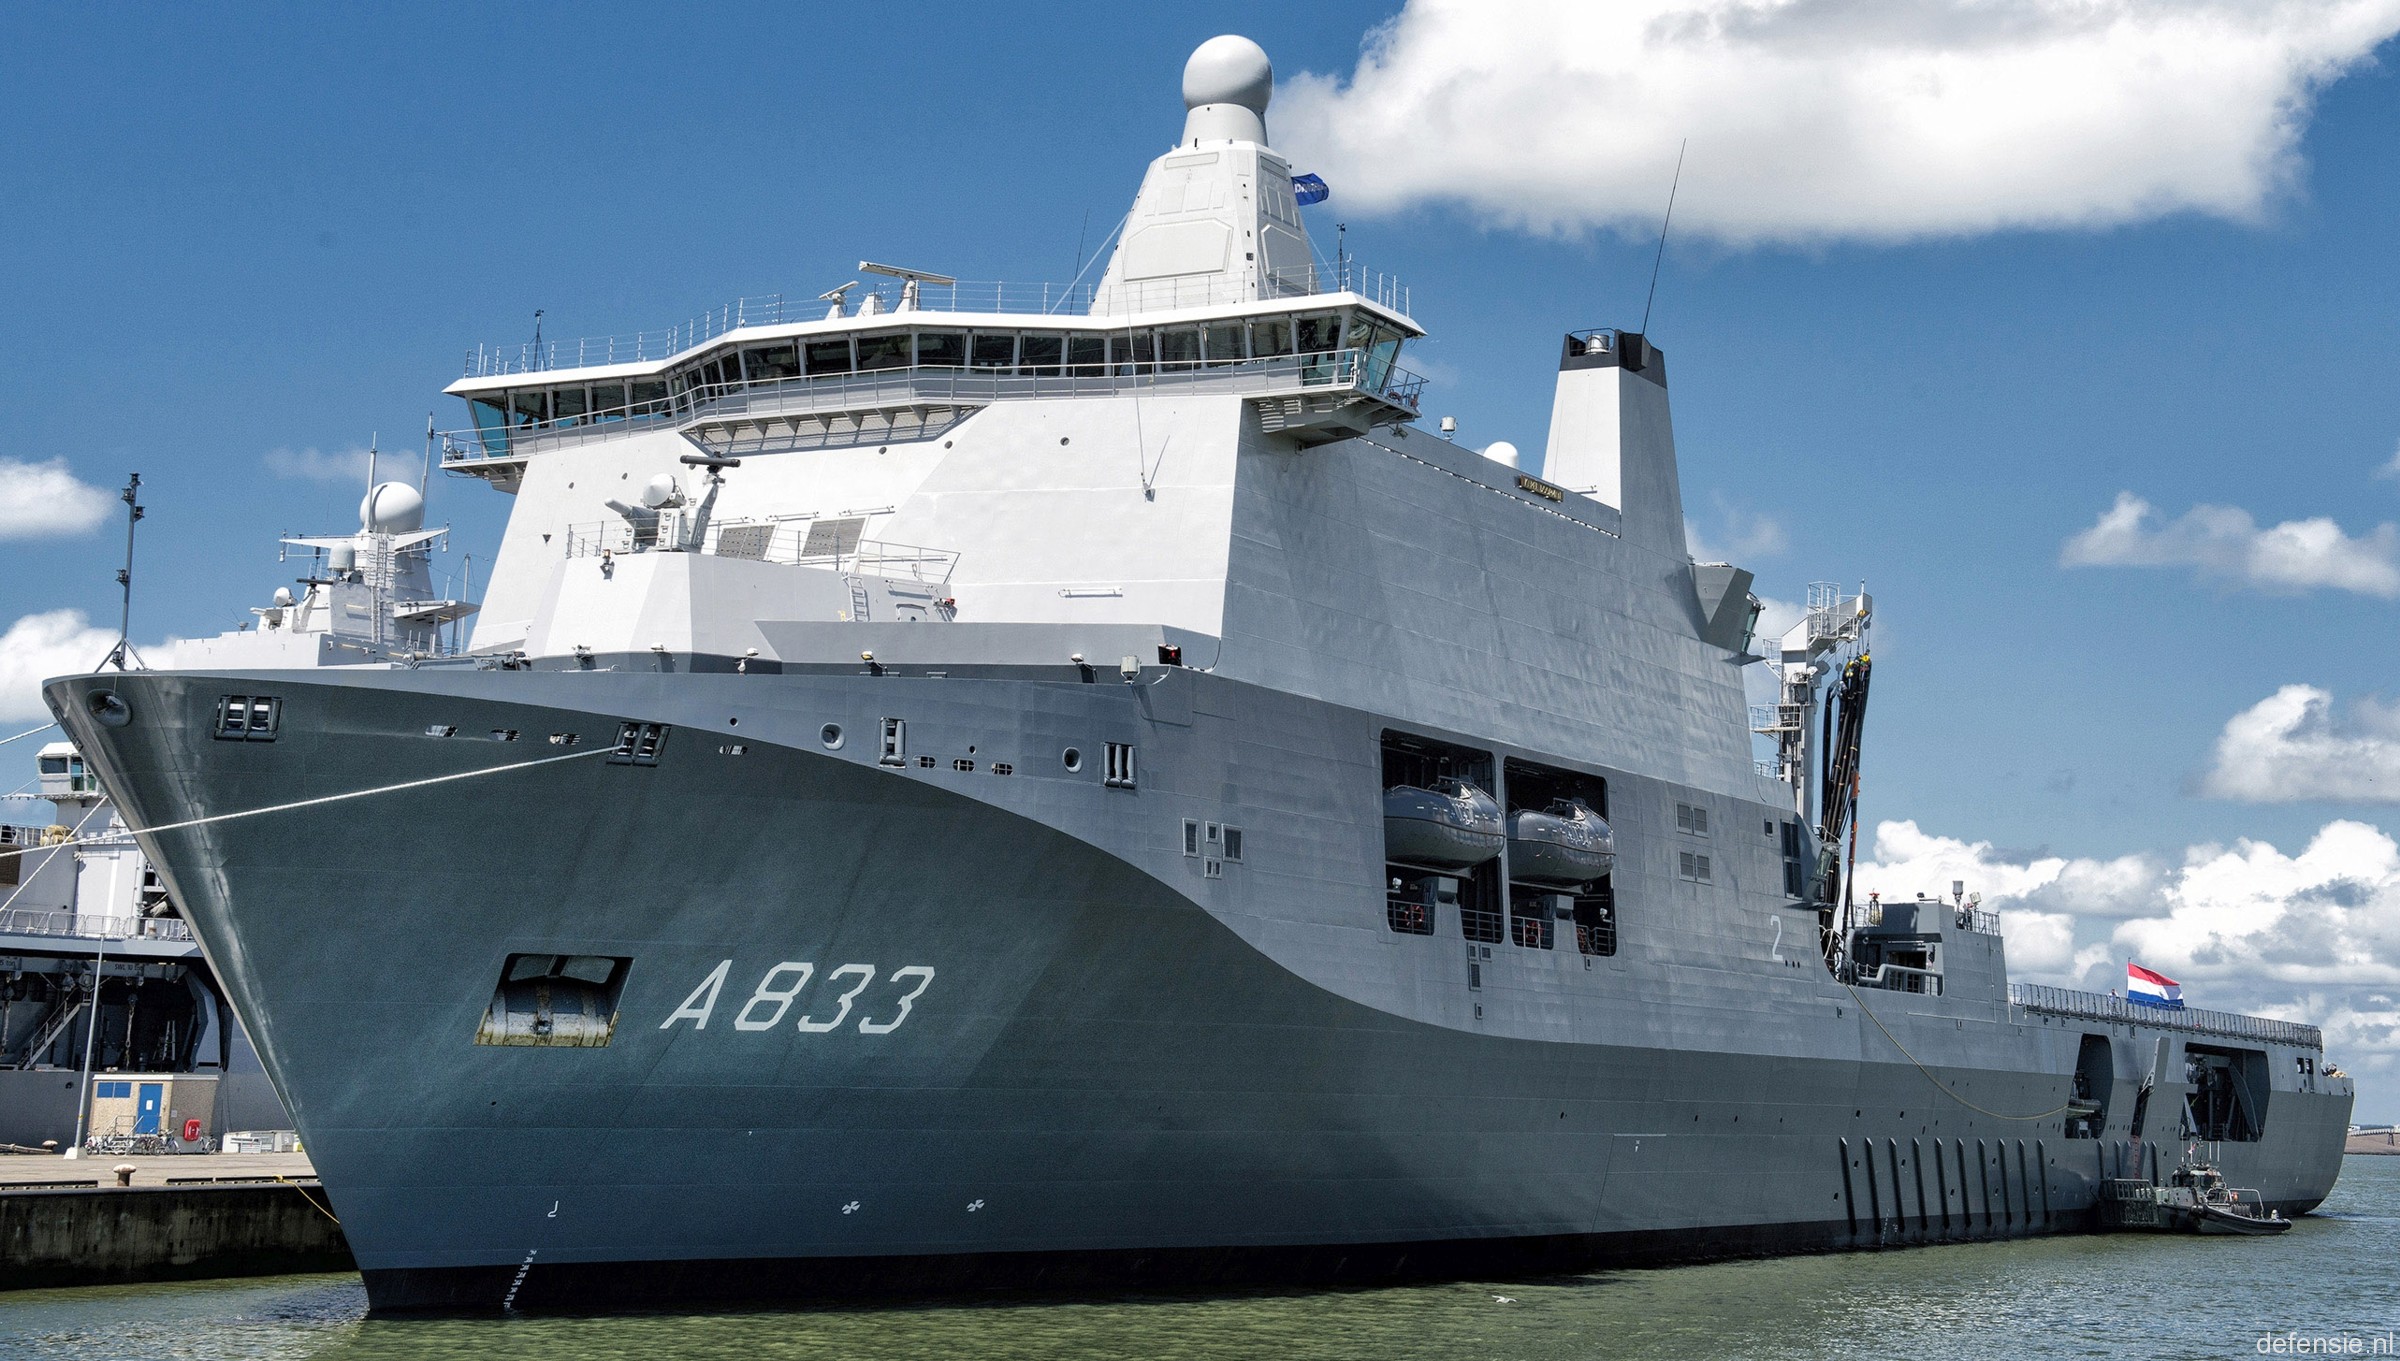 a-833 hnlms karel doorman joint support ship royal netherlands navy koninklijke marine 42